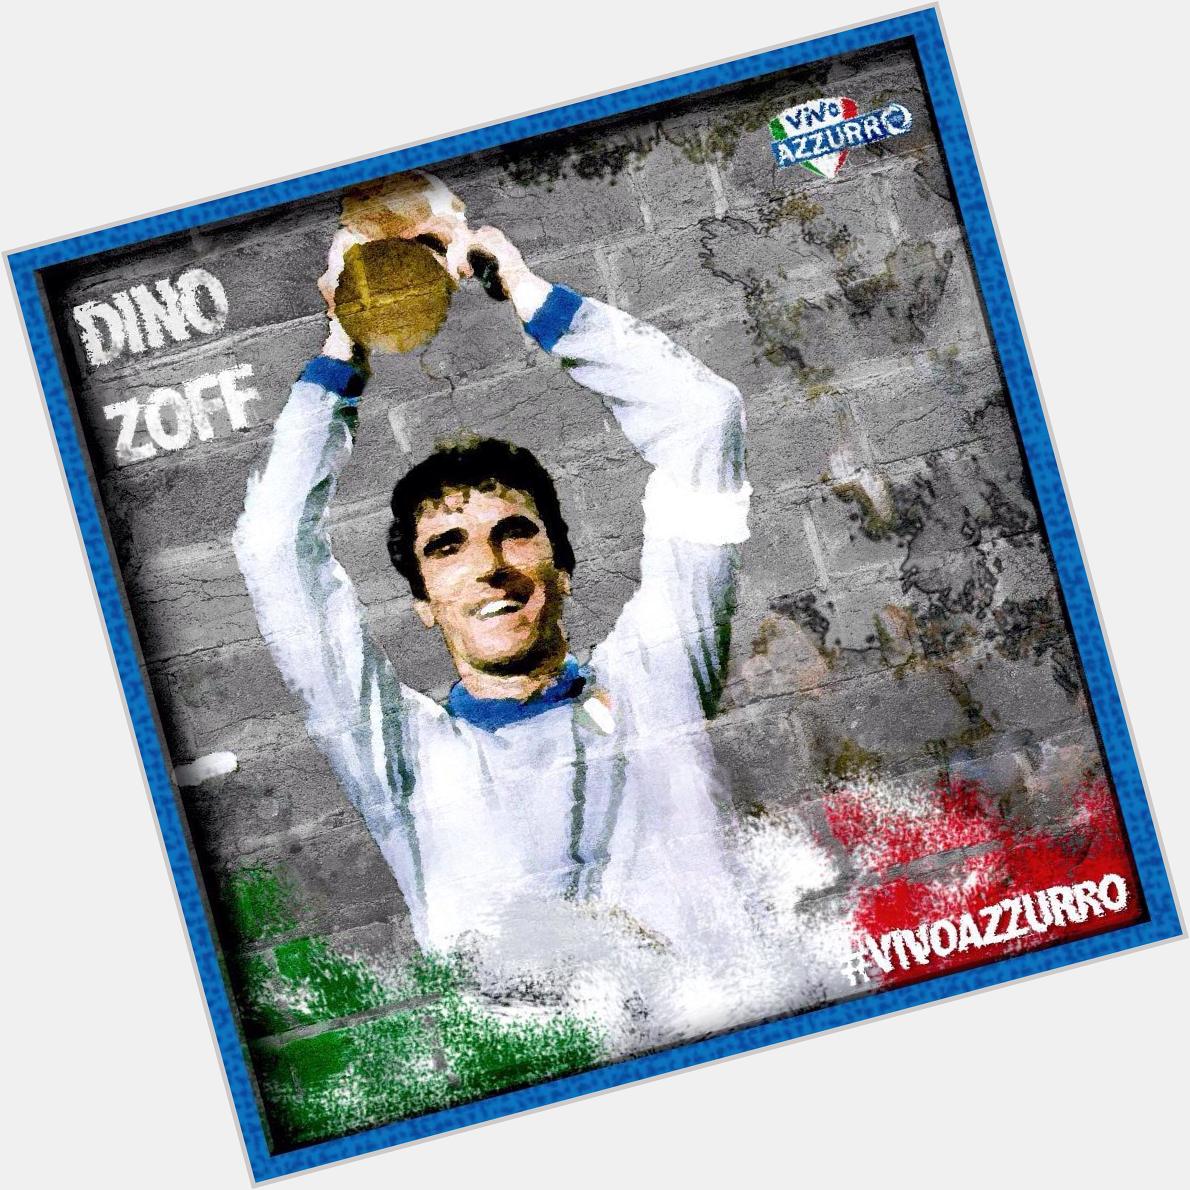 Happy Birthday Dino Zoff, 73 today. Buon Compleanno 